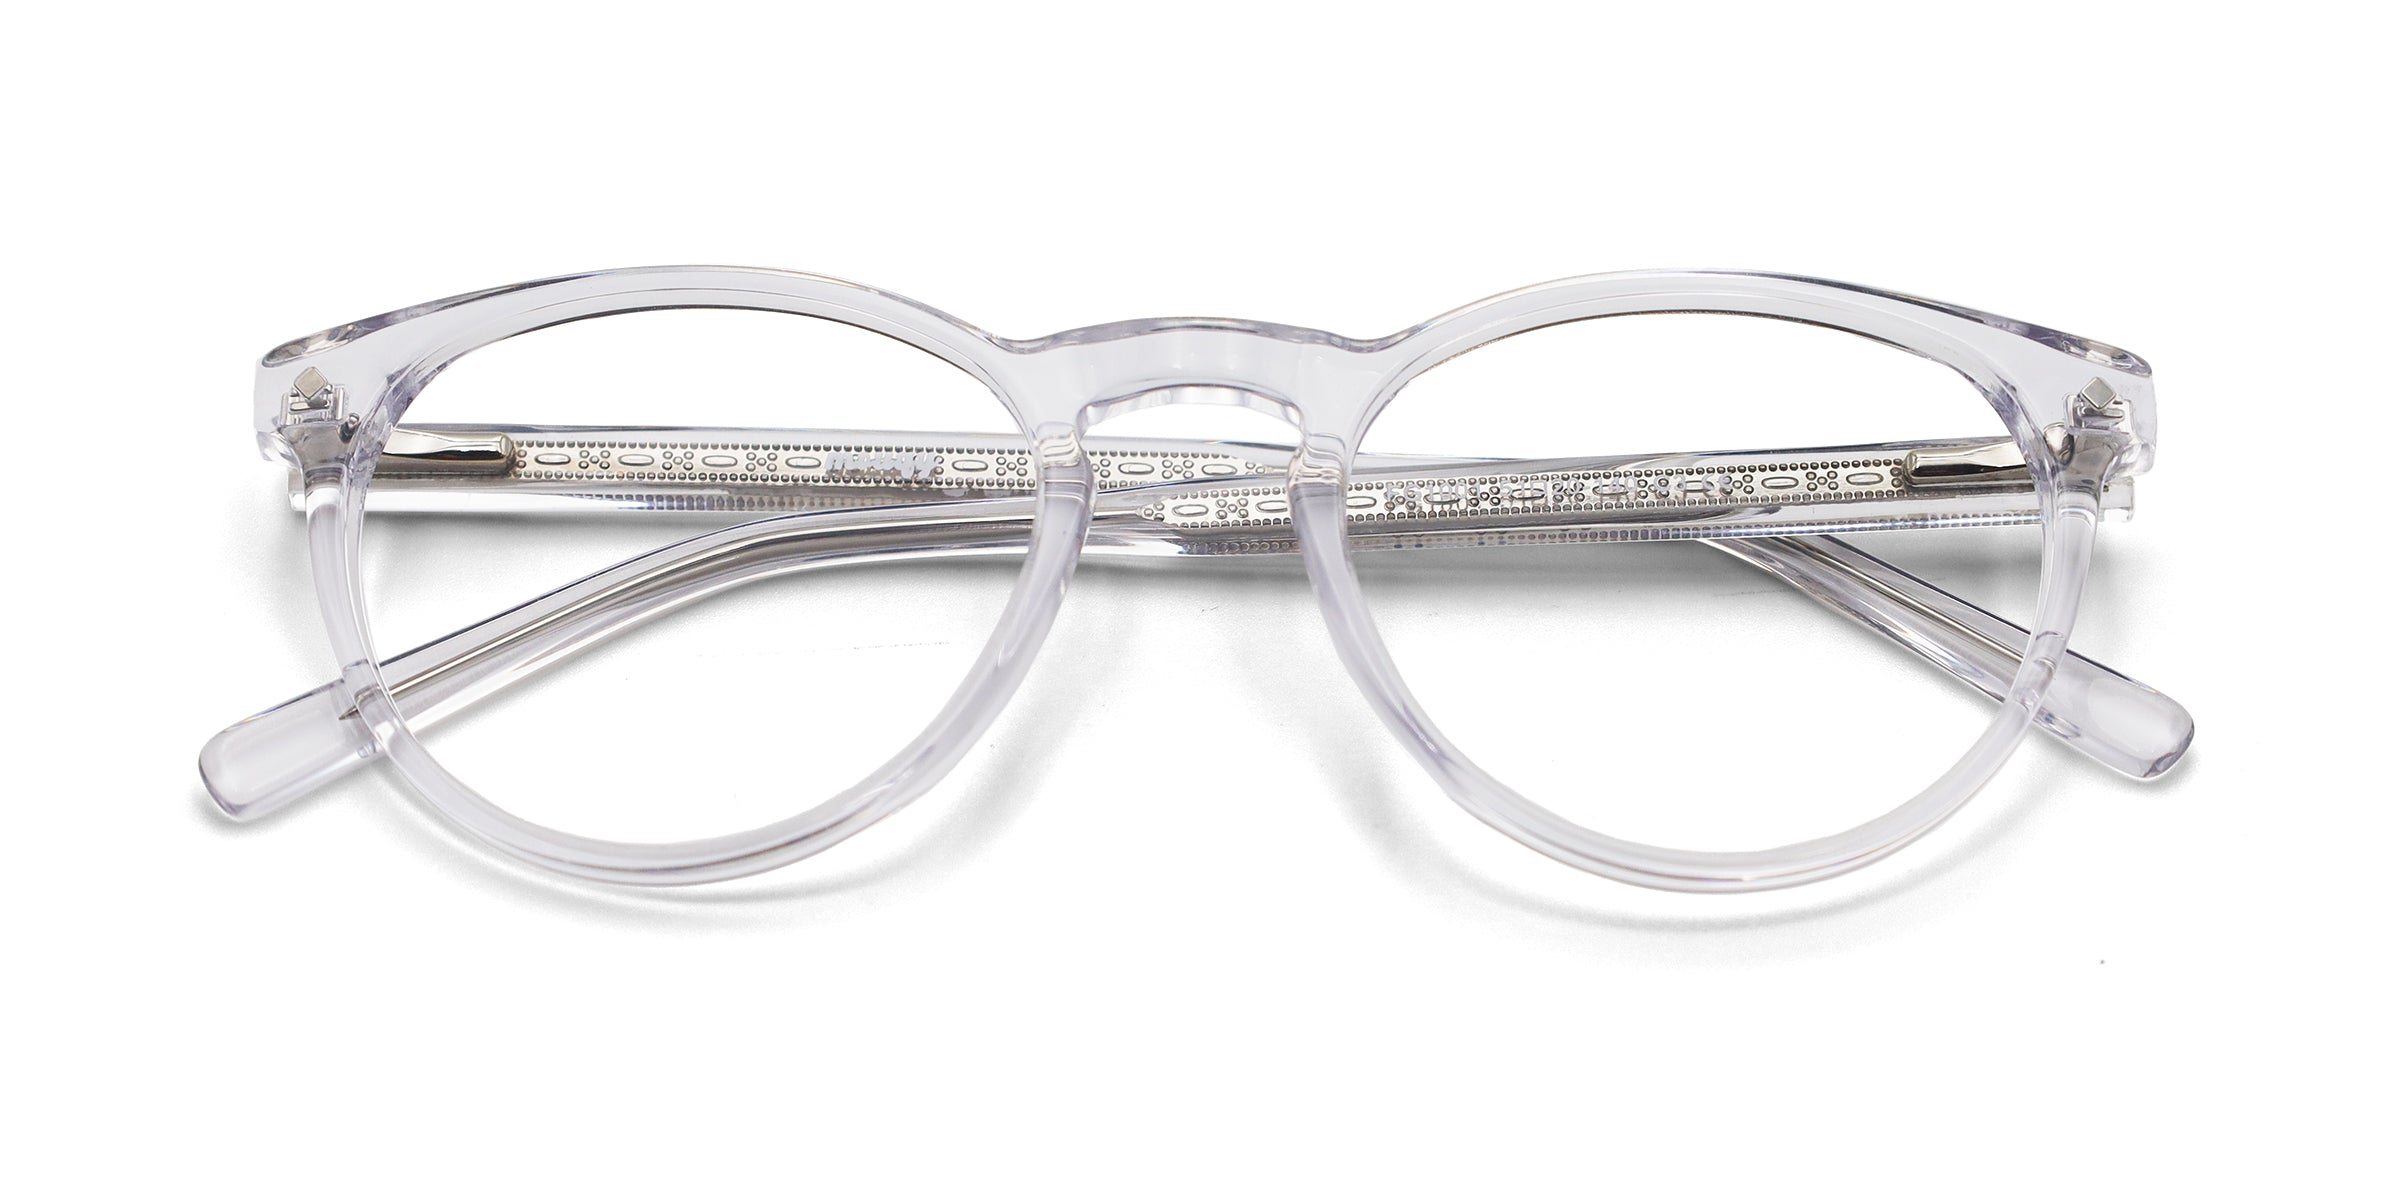 Kingly Oval Transparent eyeglasses frames top view